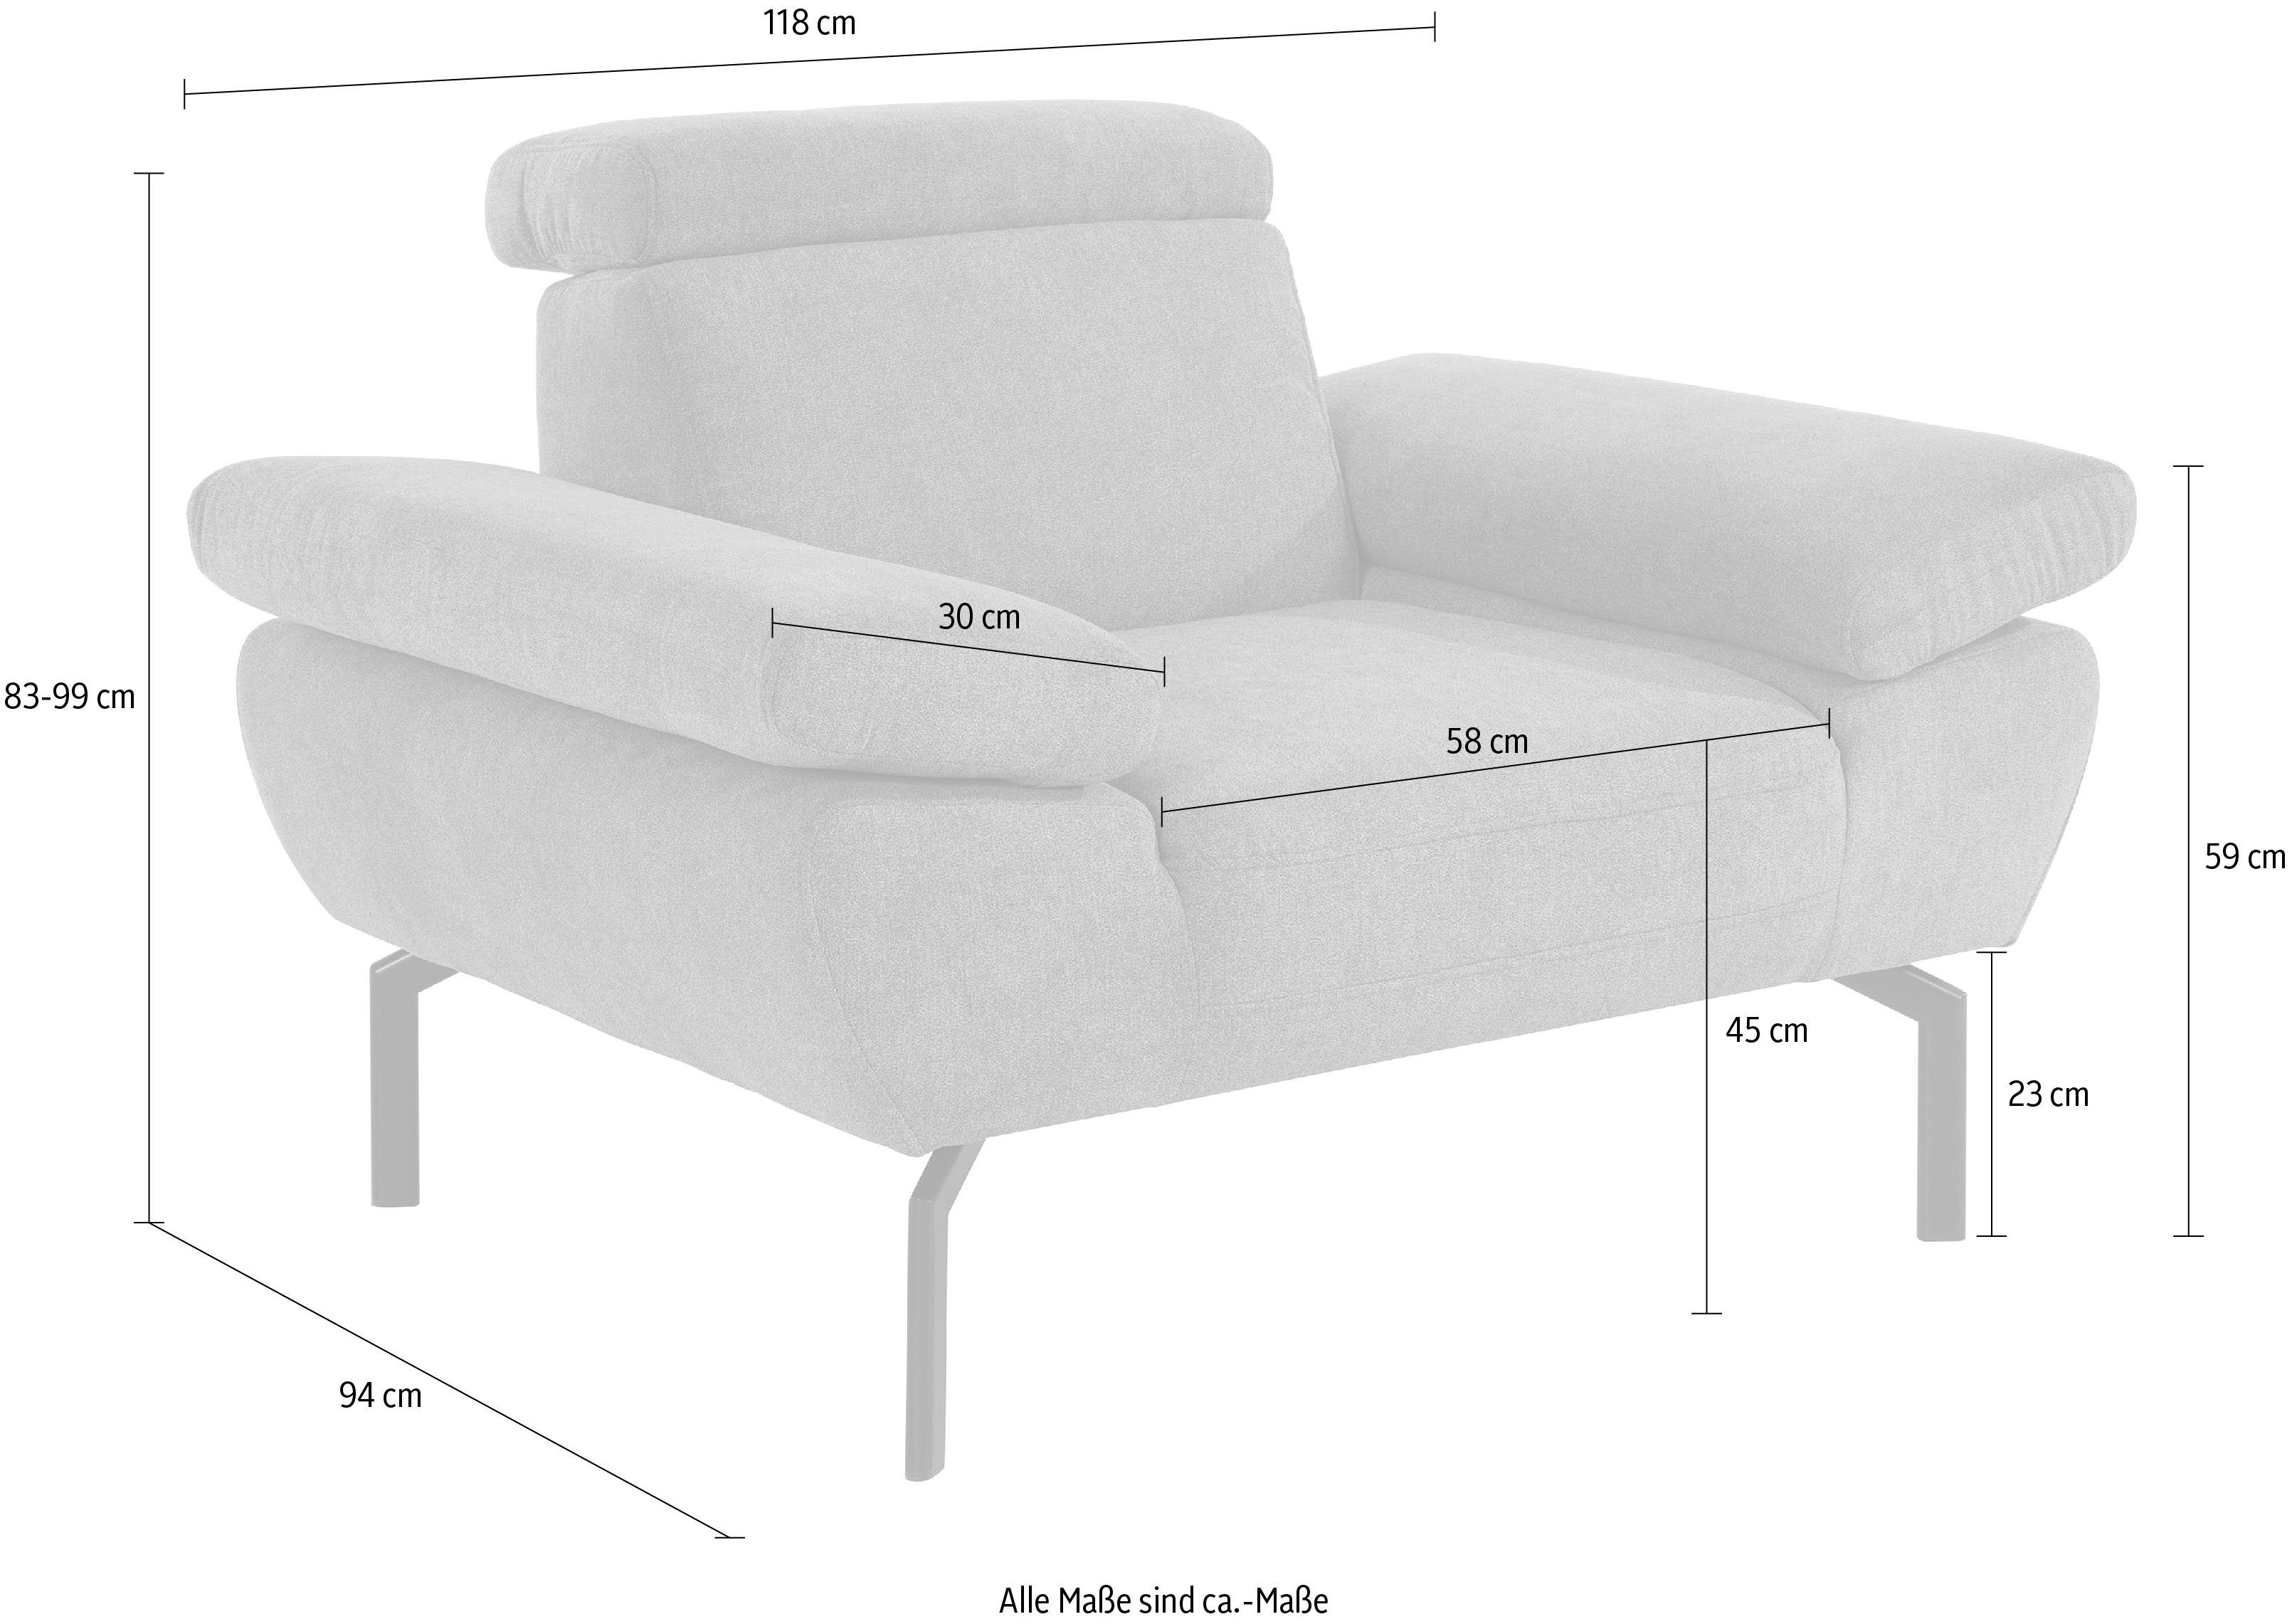 Places of Rückenverstellung, Lederoptik mit Sessel in wahlweise Luxus-Microfaser Style Luxus, Trapino